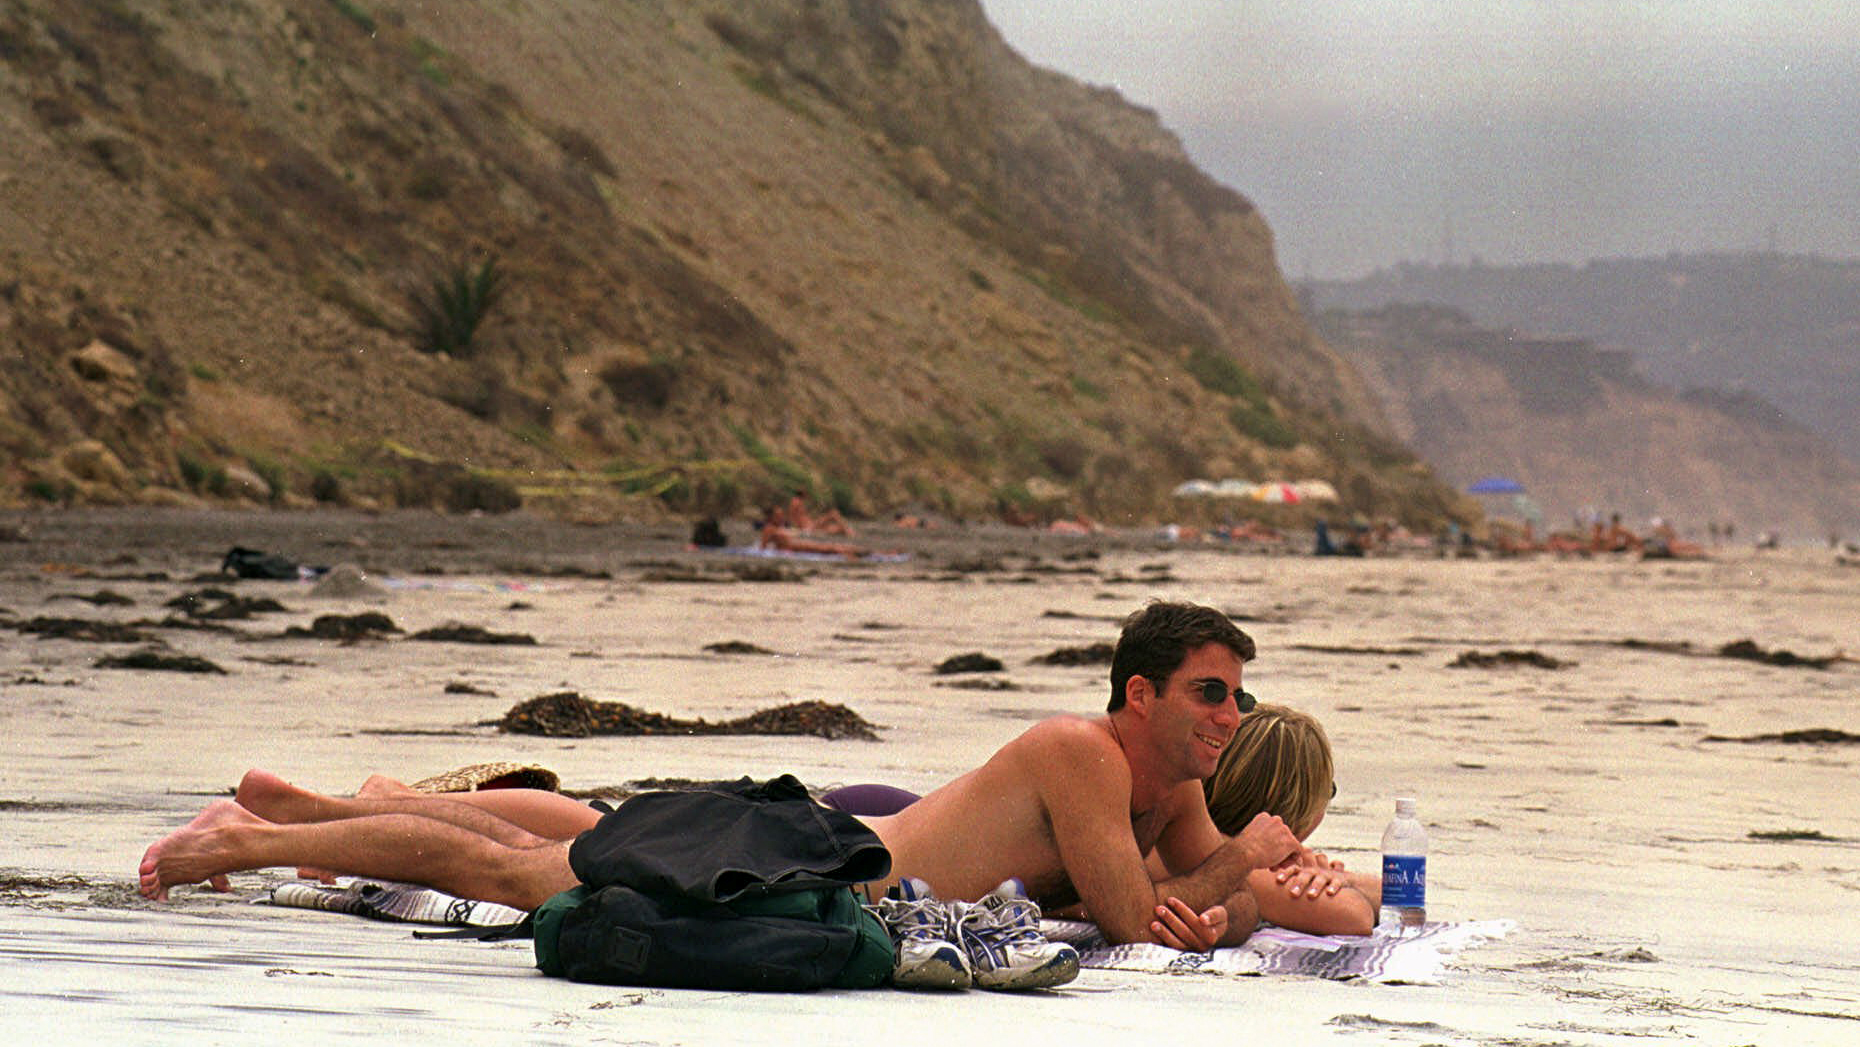 candid florida nude beach porn scene picture